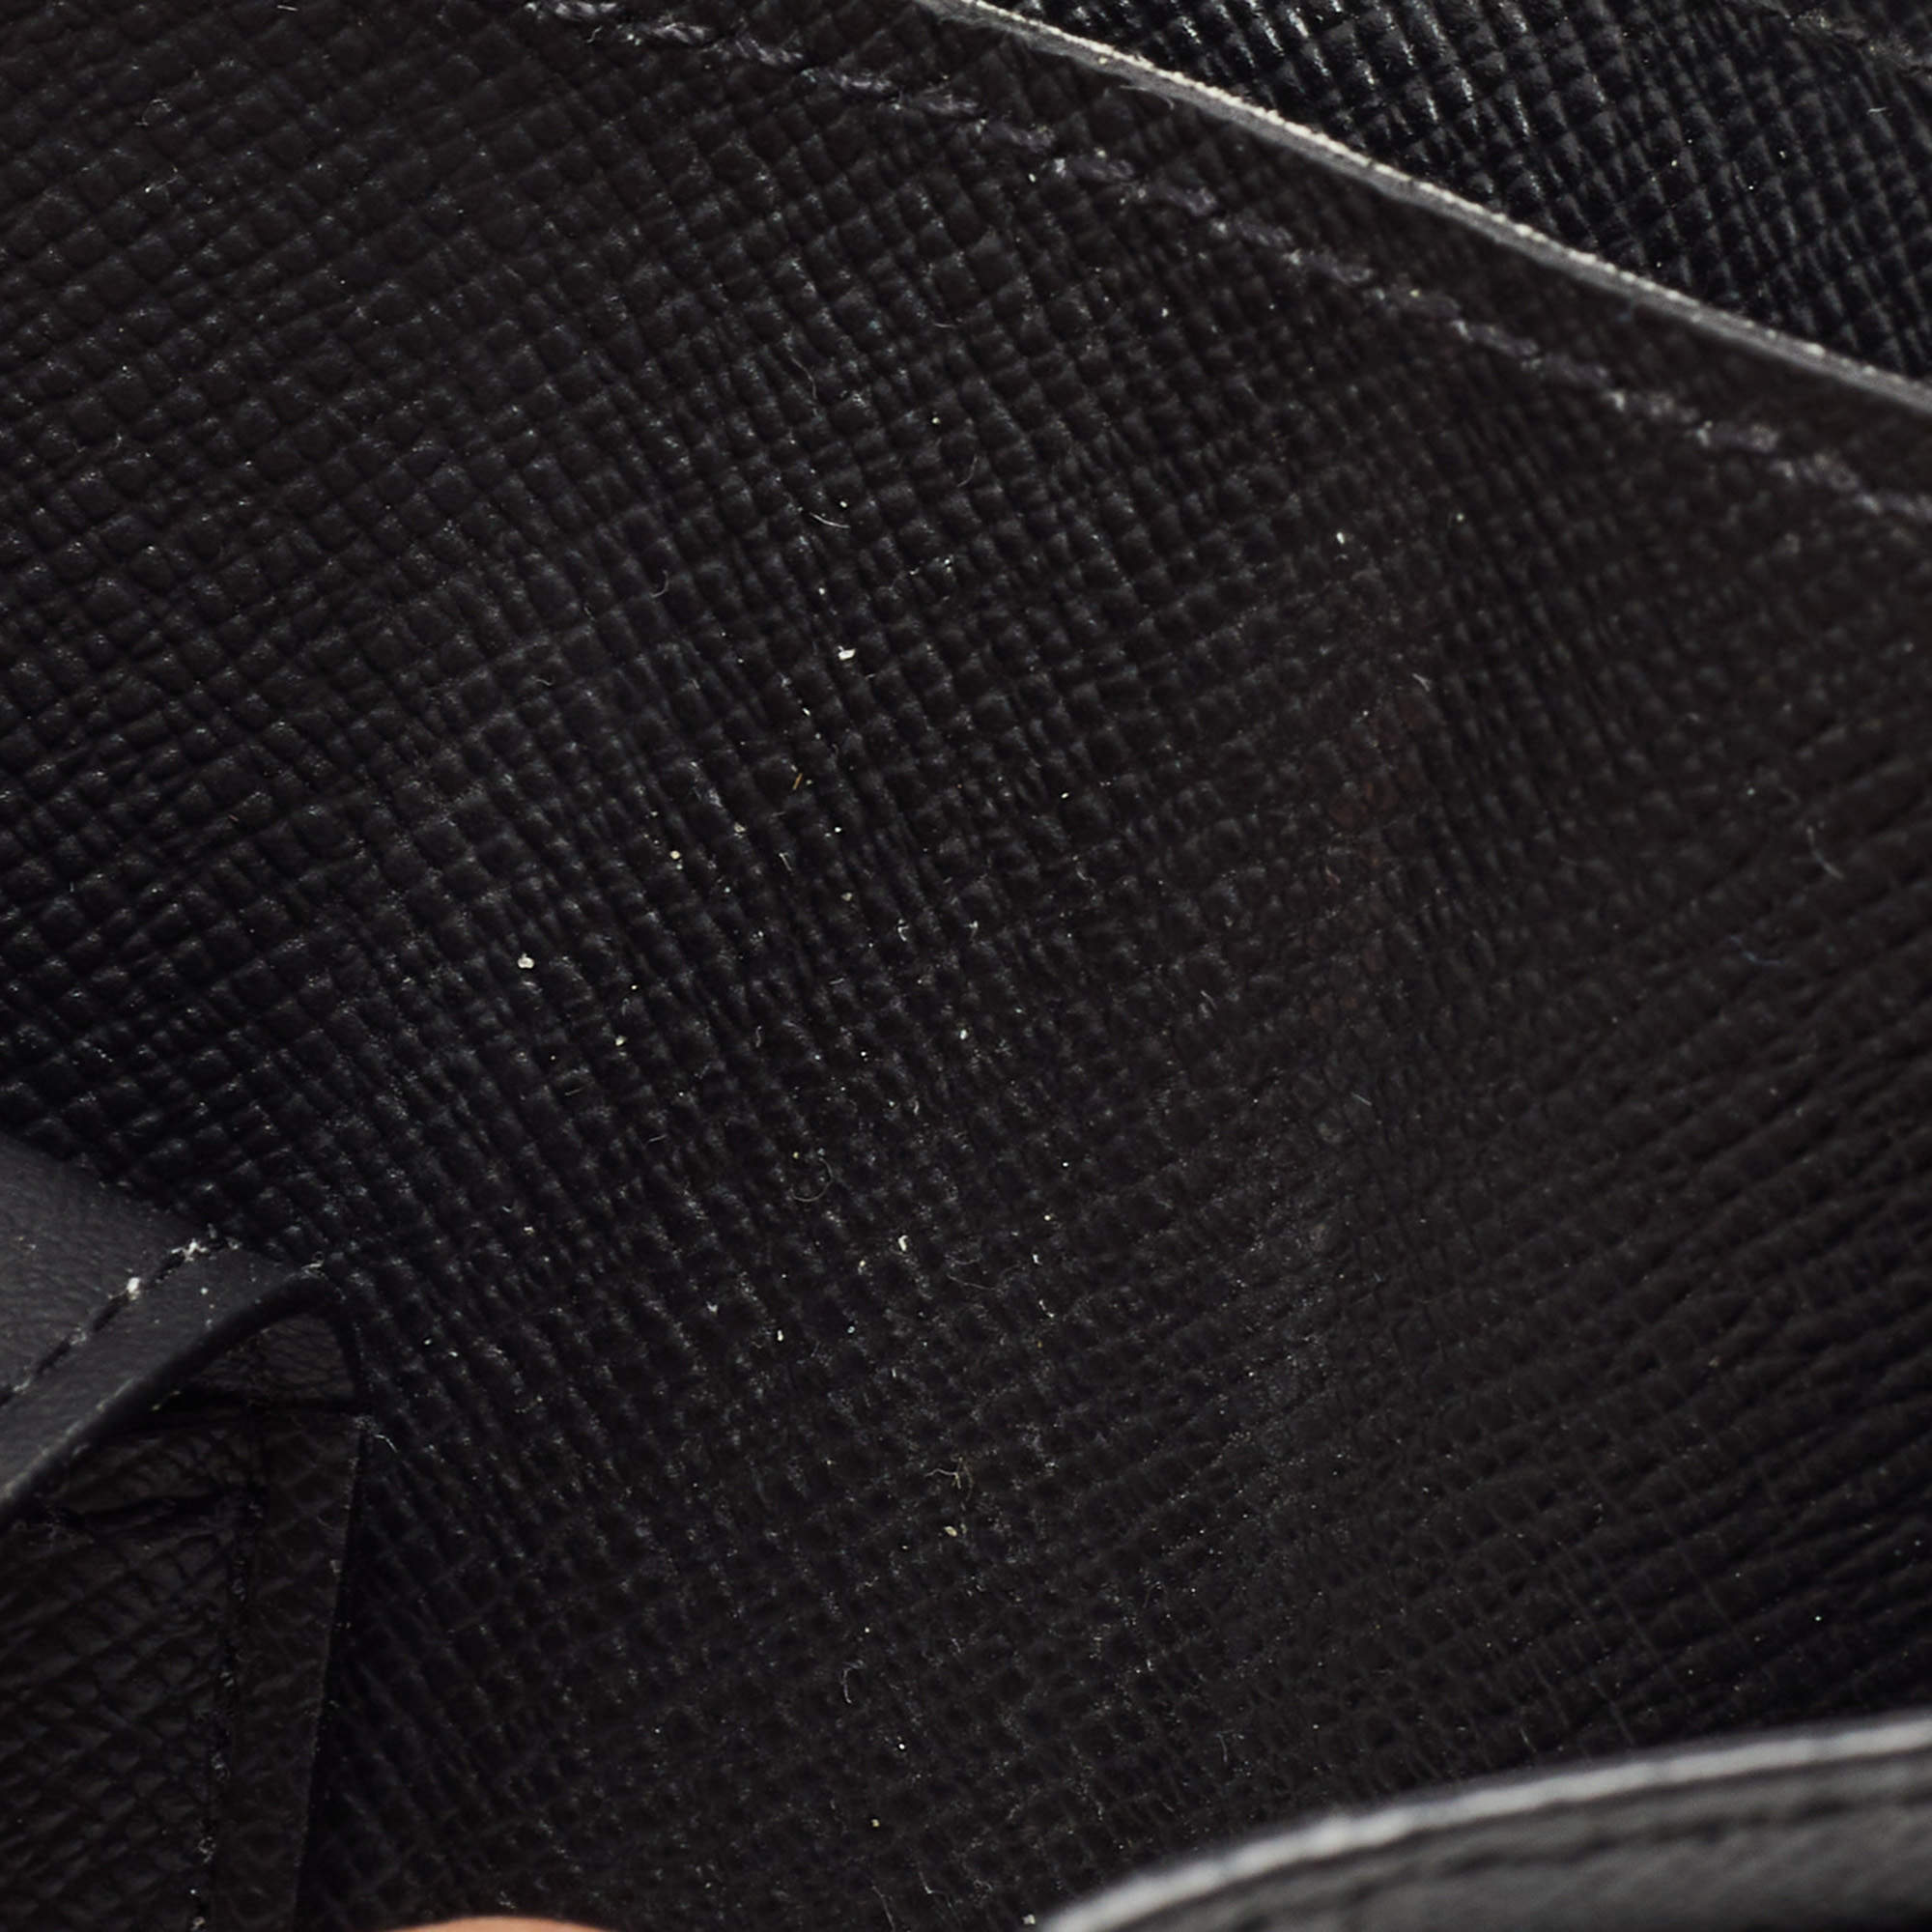 Louis Vuitton Slender Wallet Epi Leather Black 1682762